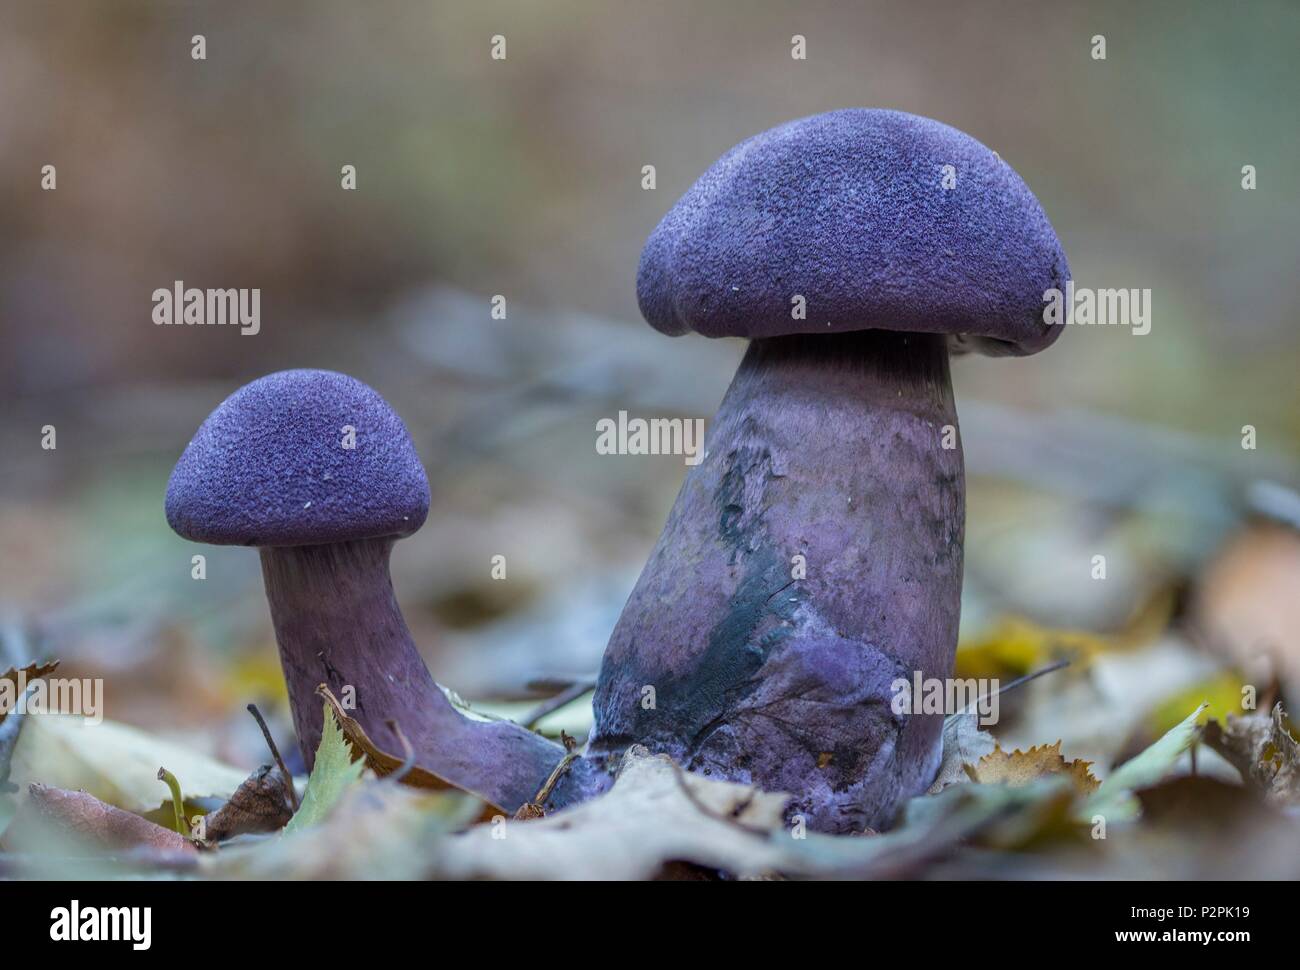 France, Normandy, violet webcap or violet cort (Cortinarius violaceus) Stock Photo